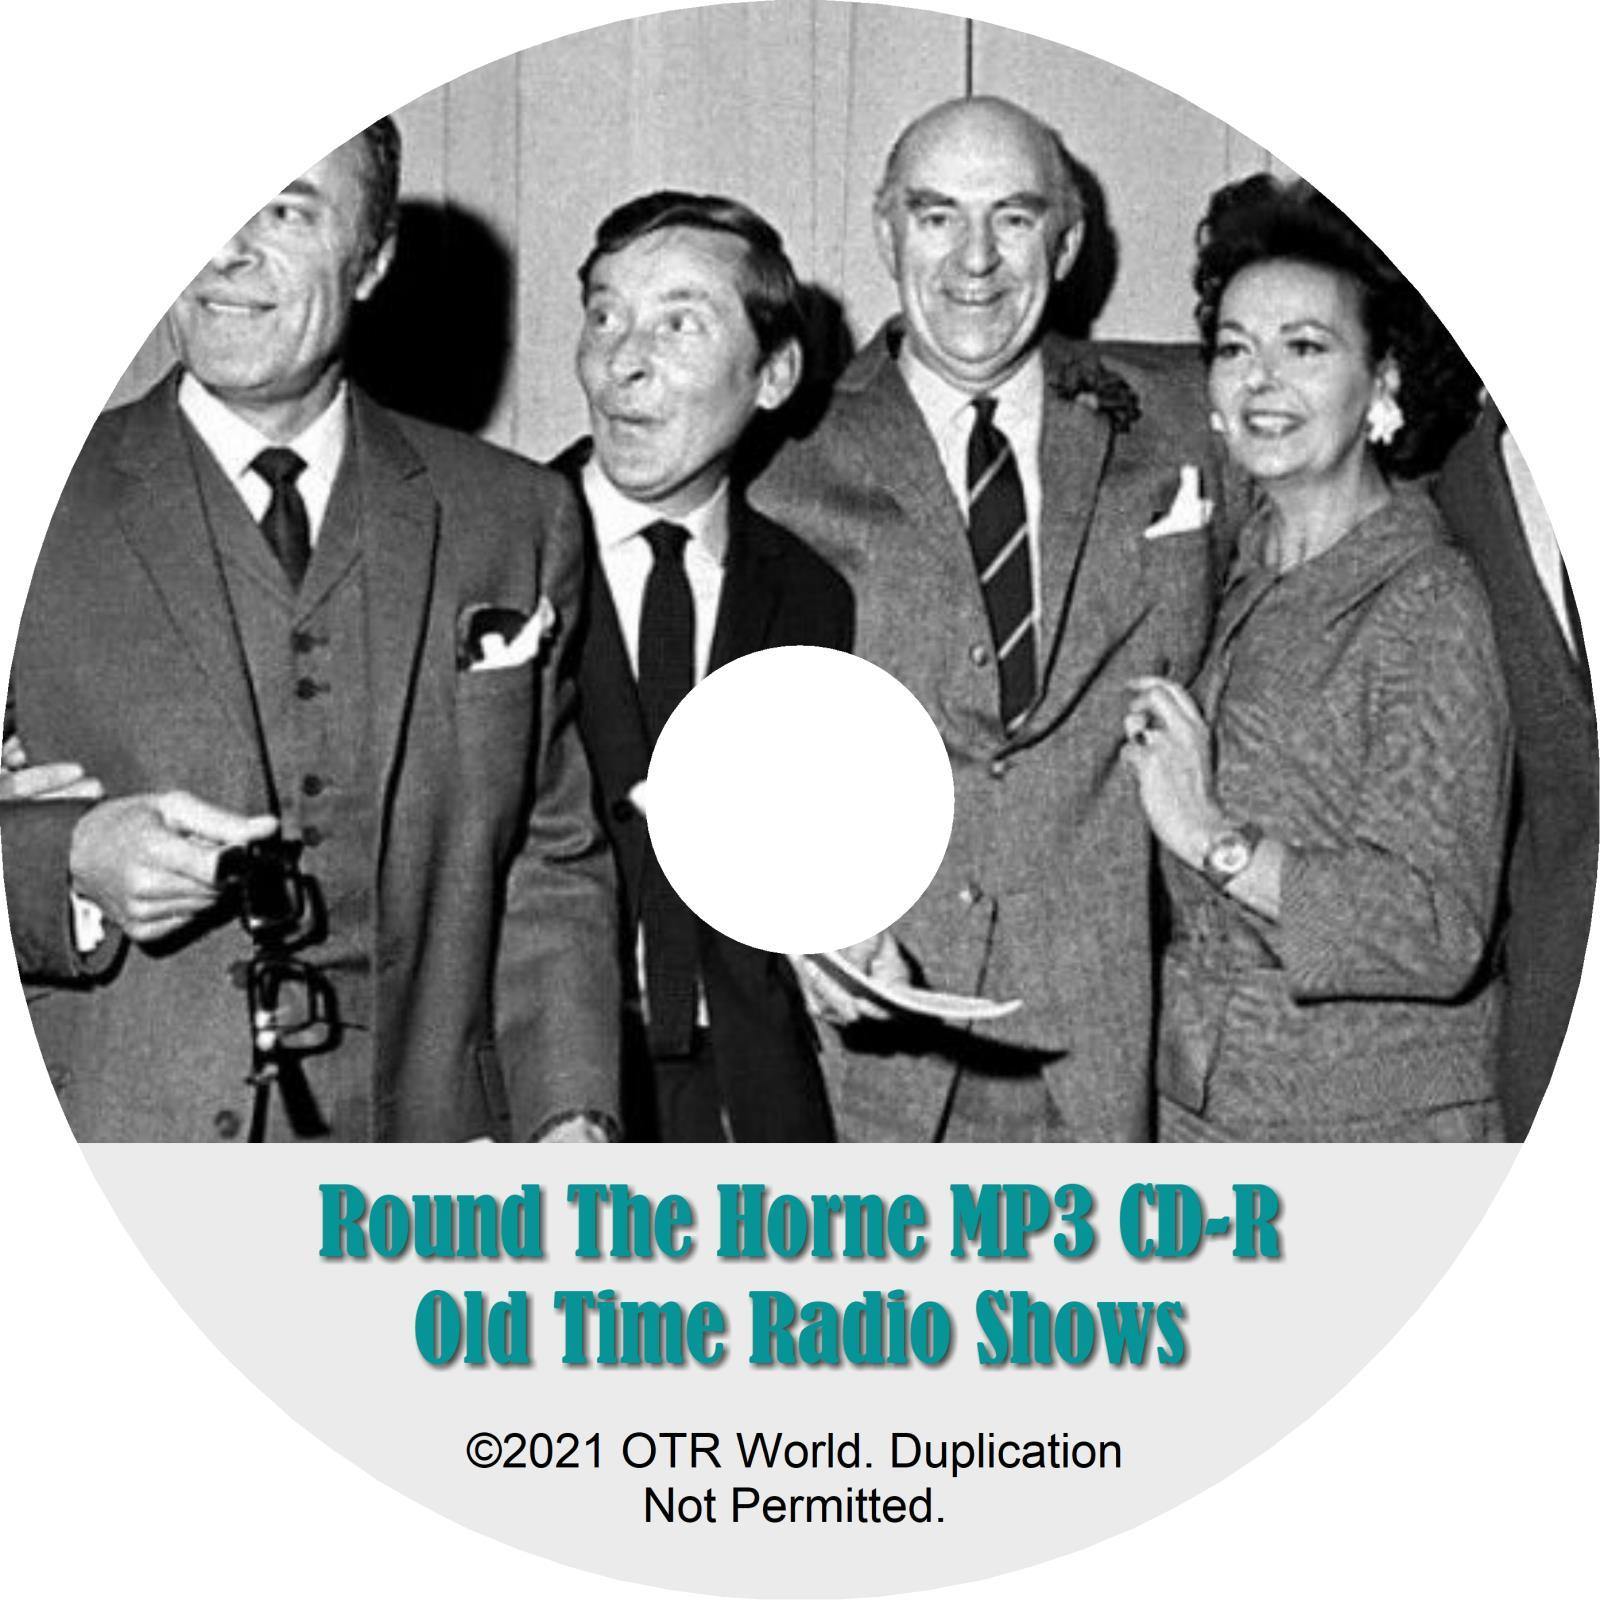 Round The Horne OTR OTRS Old Time Radio Shows MP3 On CD-R 69 Episodes BBC - OTR World